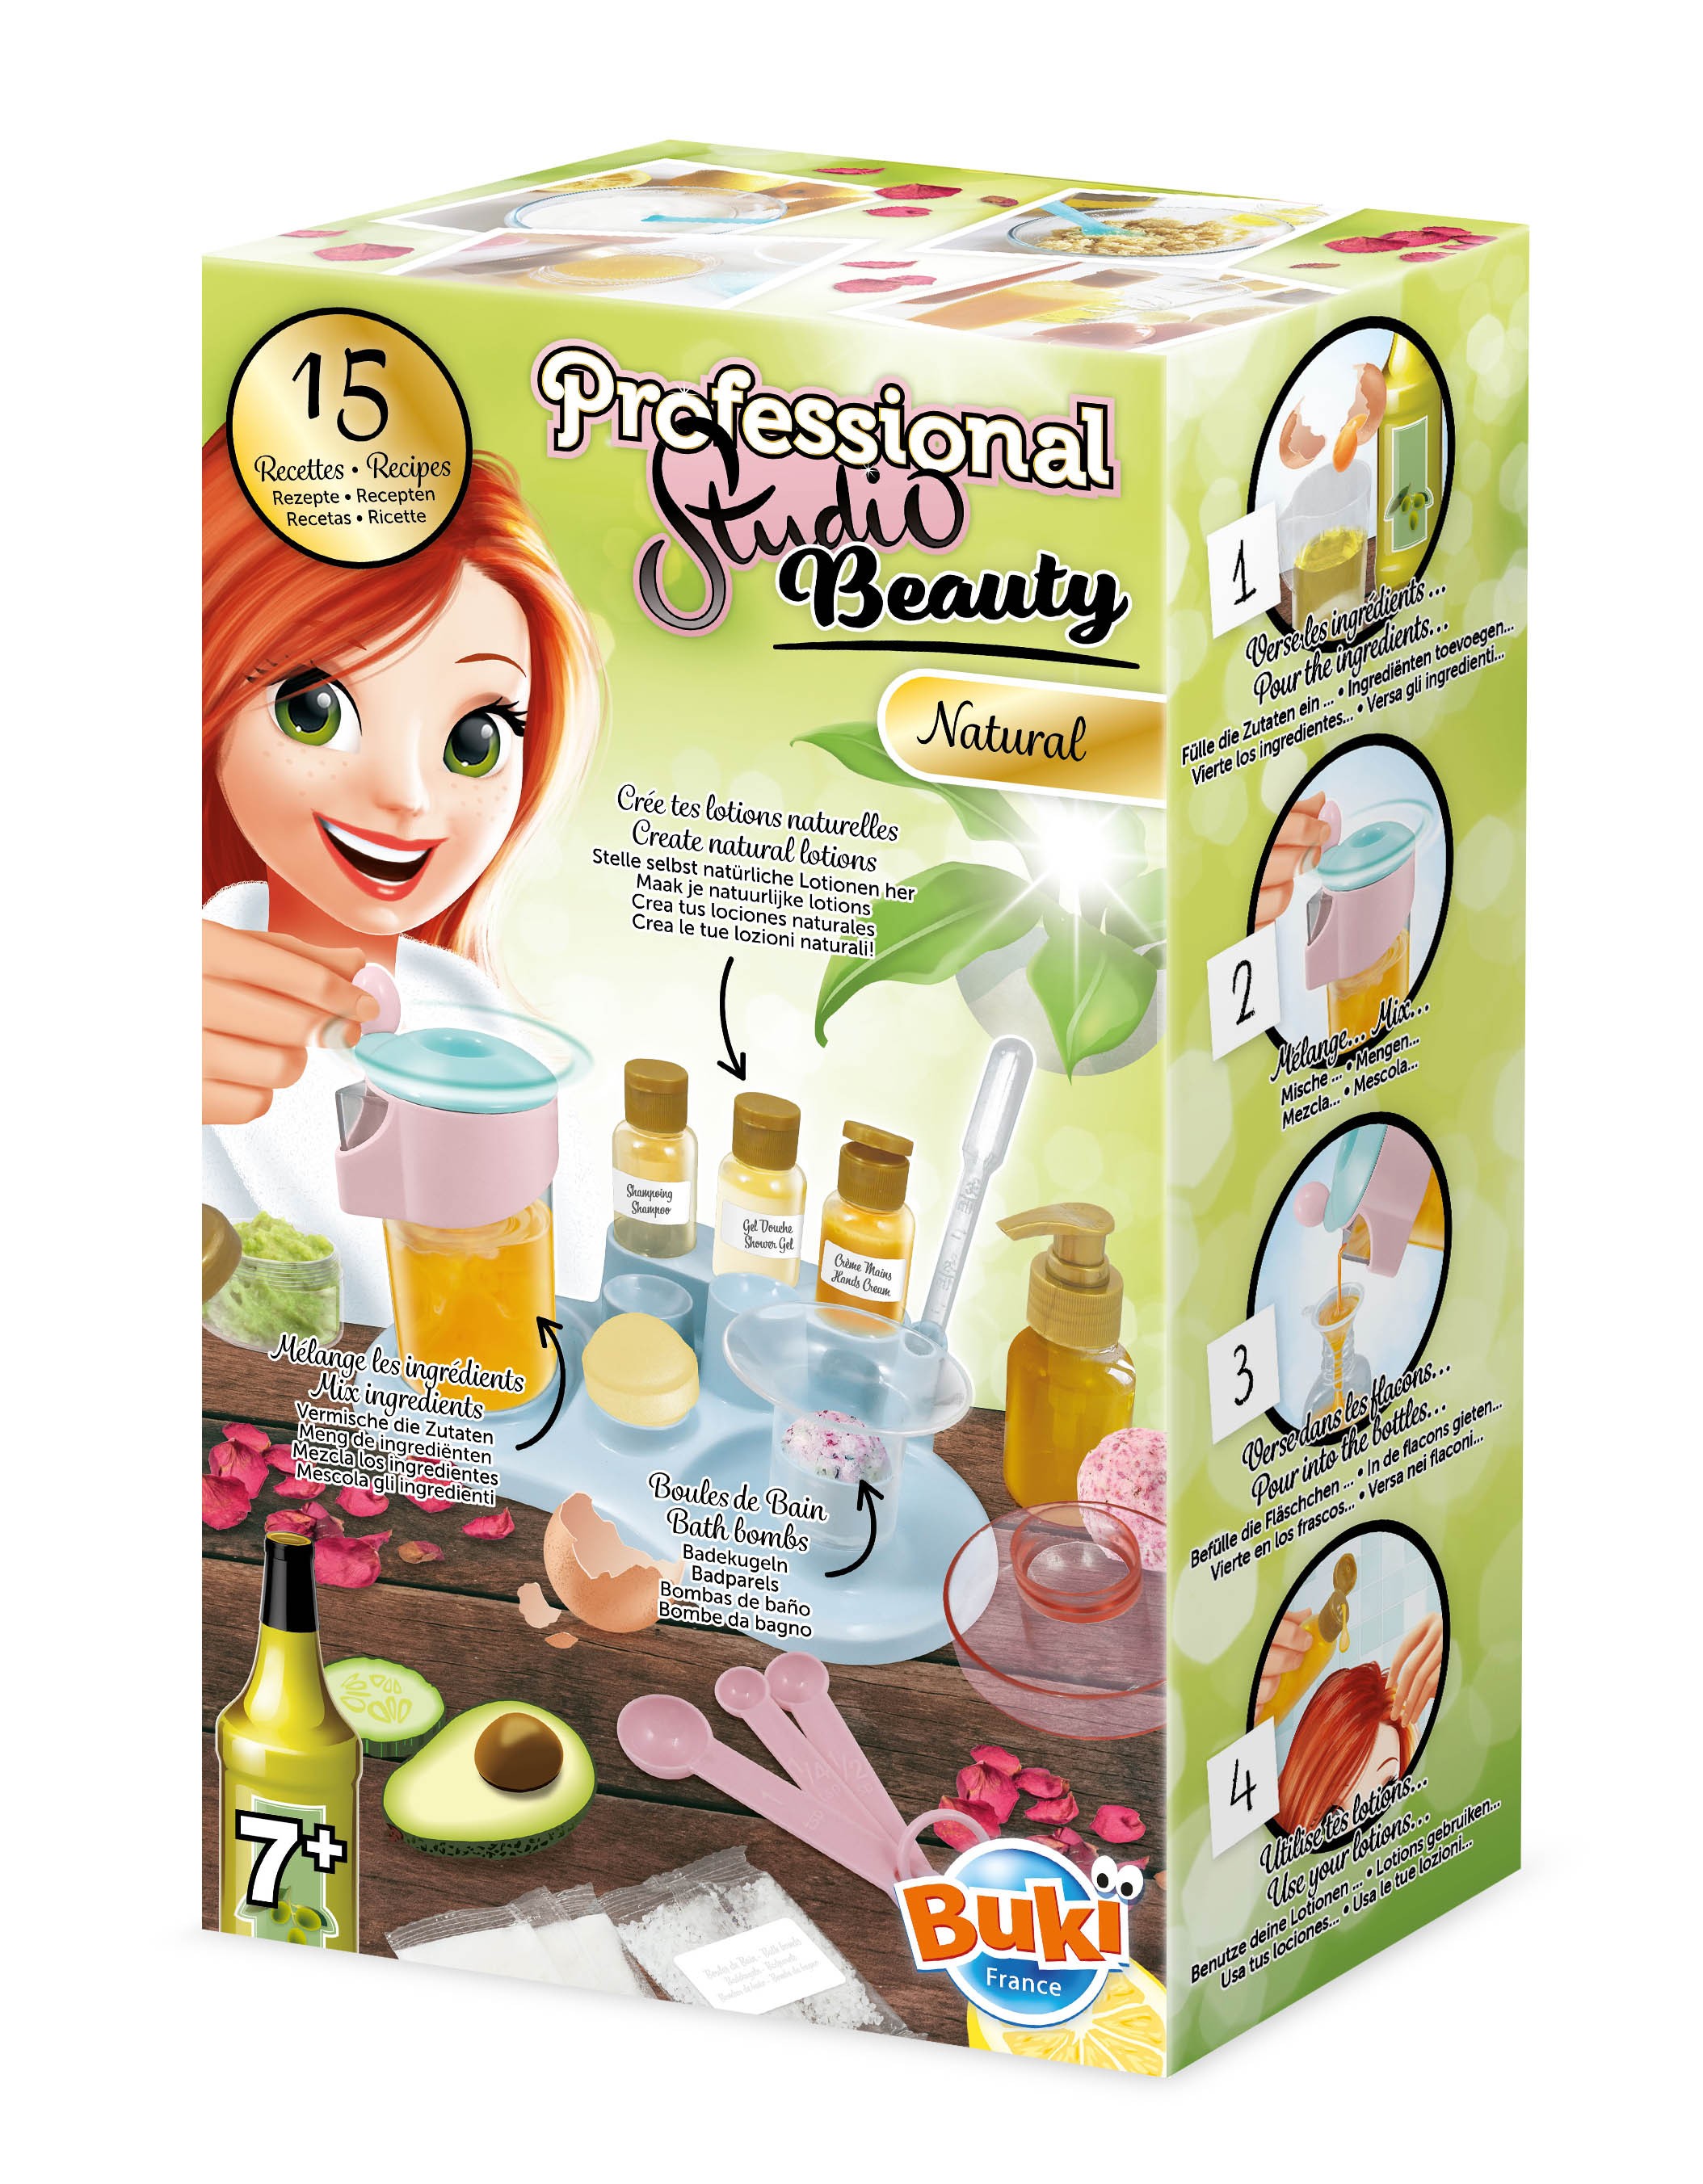 Professional studio beauty natural - Buki | Beebs